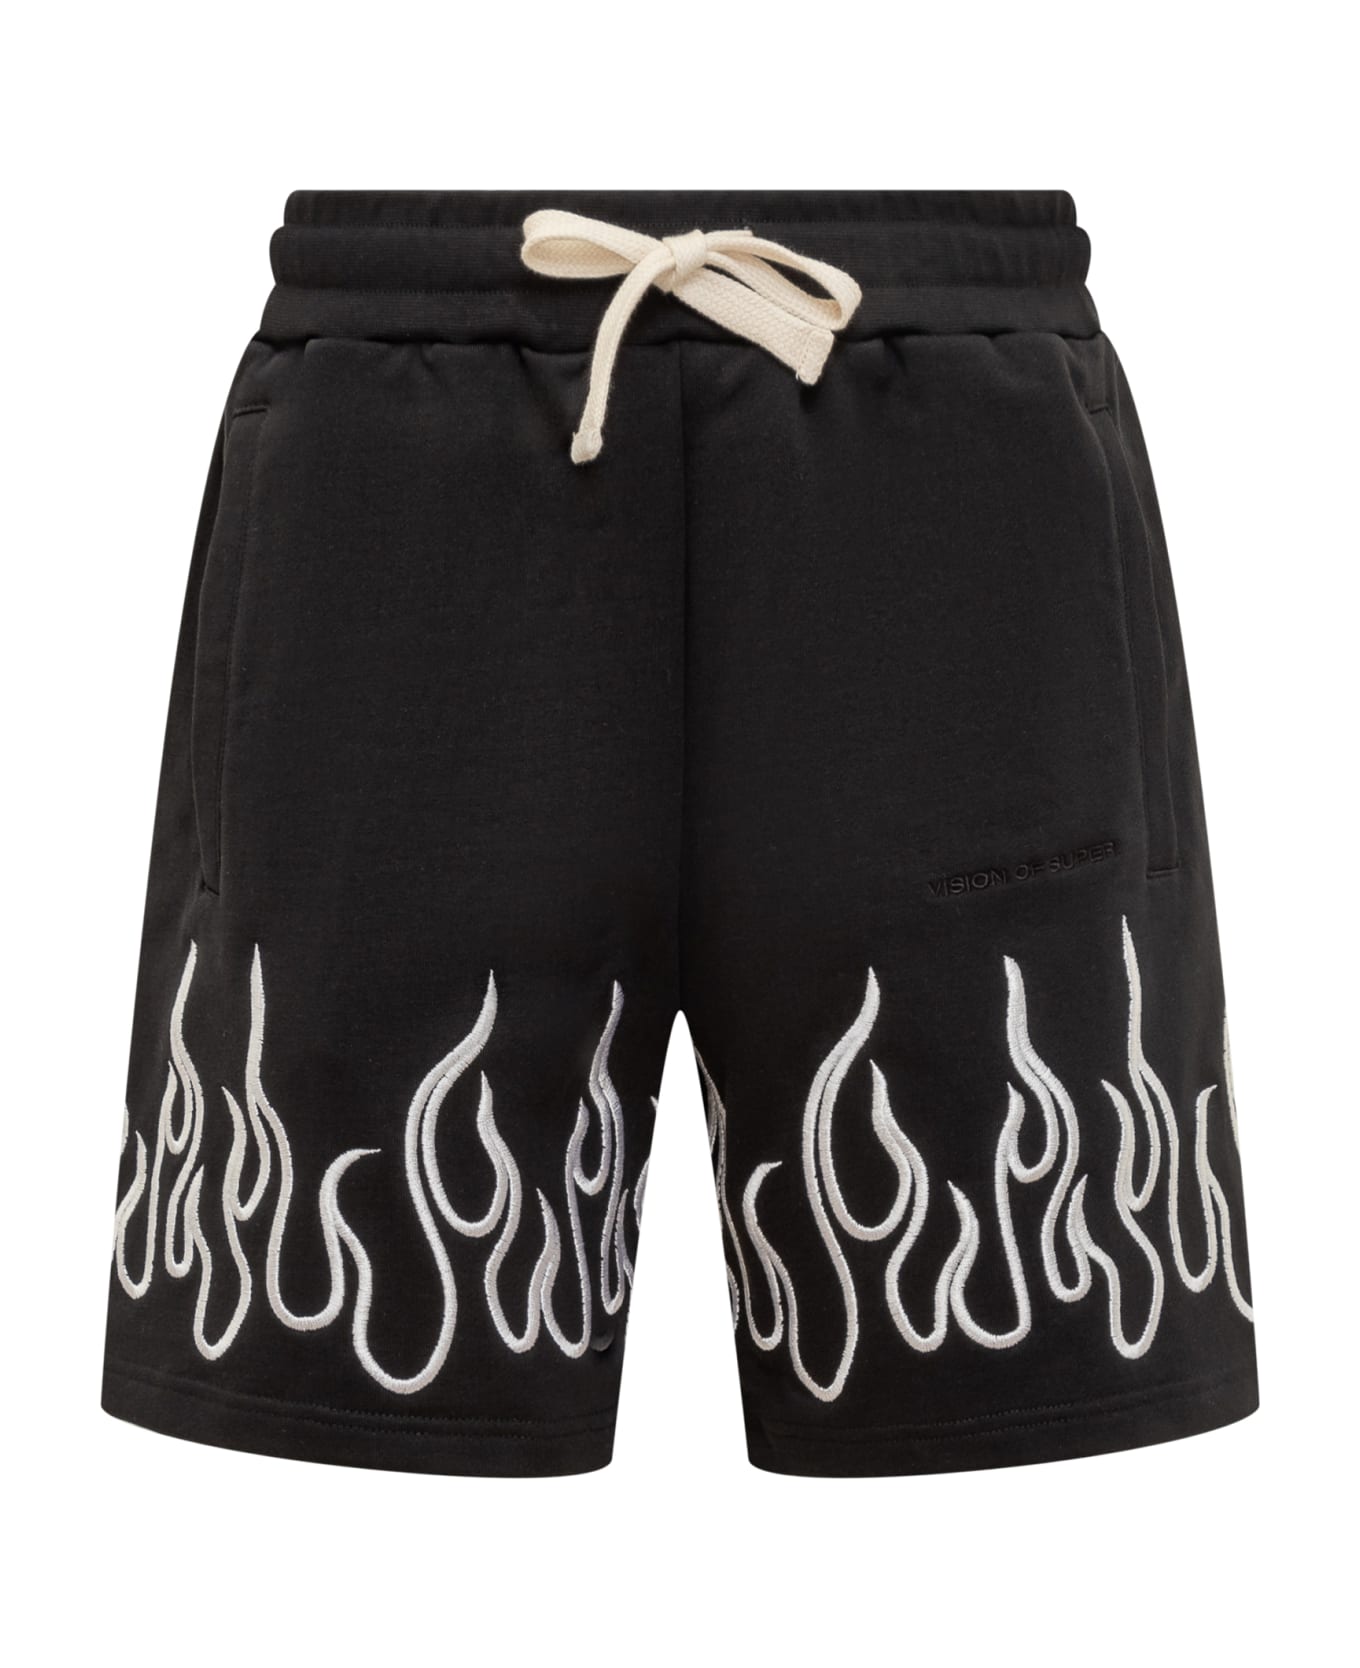 Vision of Super Flames Shorts - BLACK